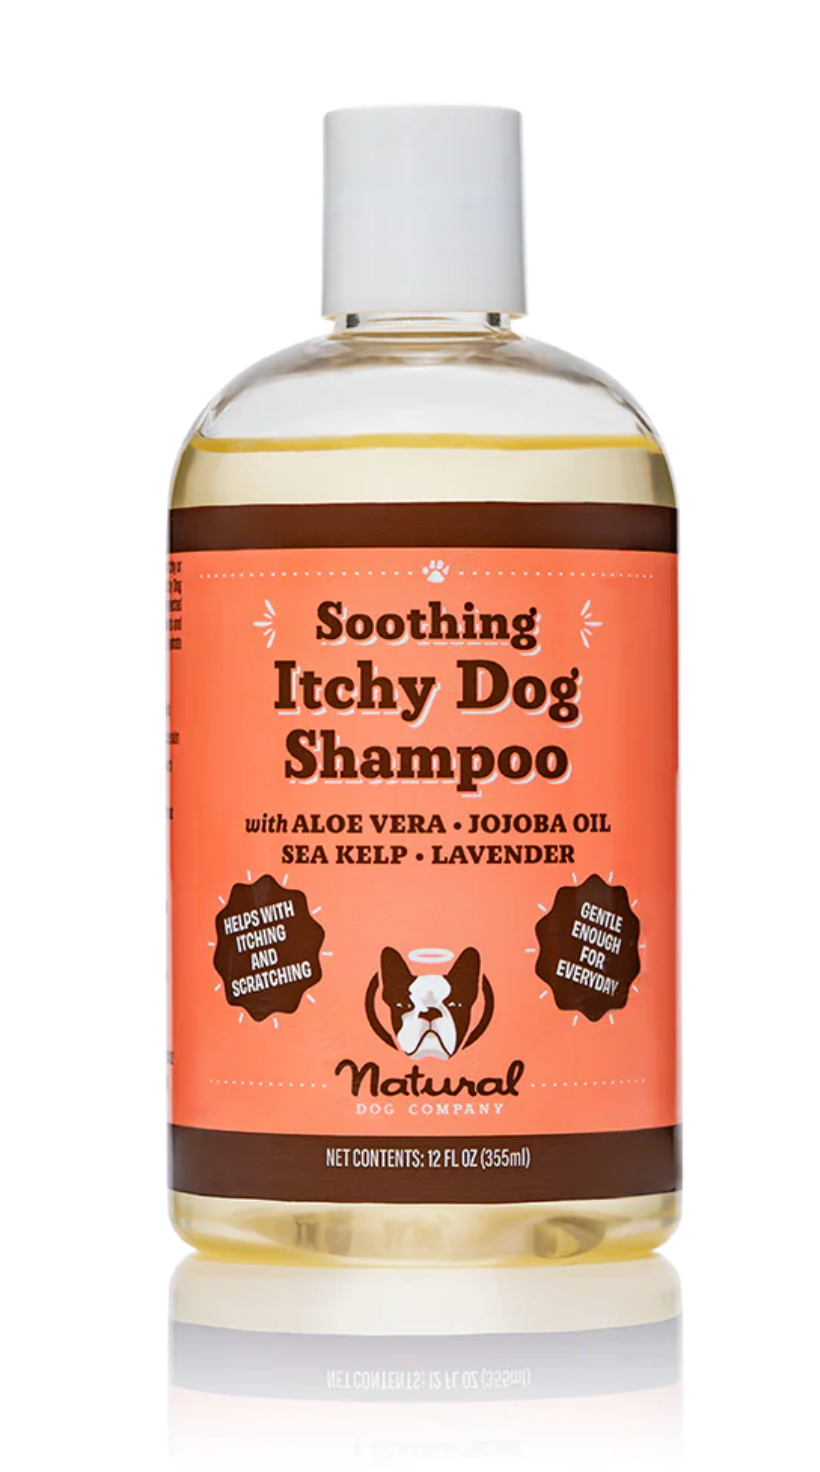 Natural Dog Company Itchy Dog Shampoo 12 fl oz